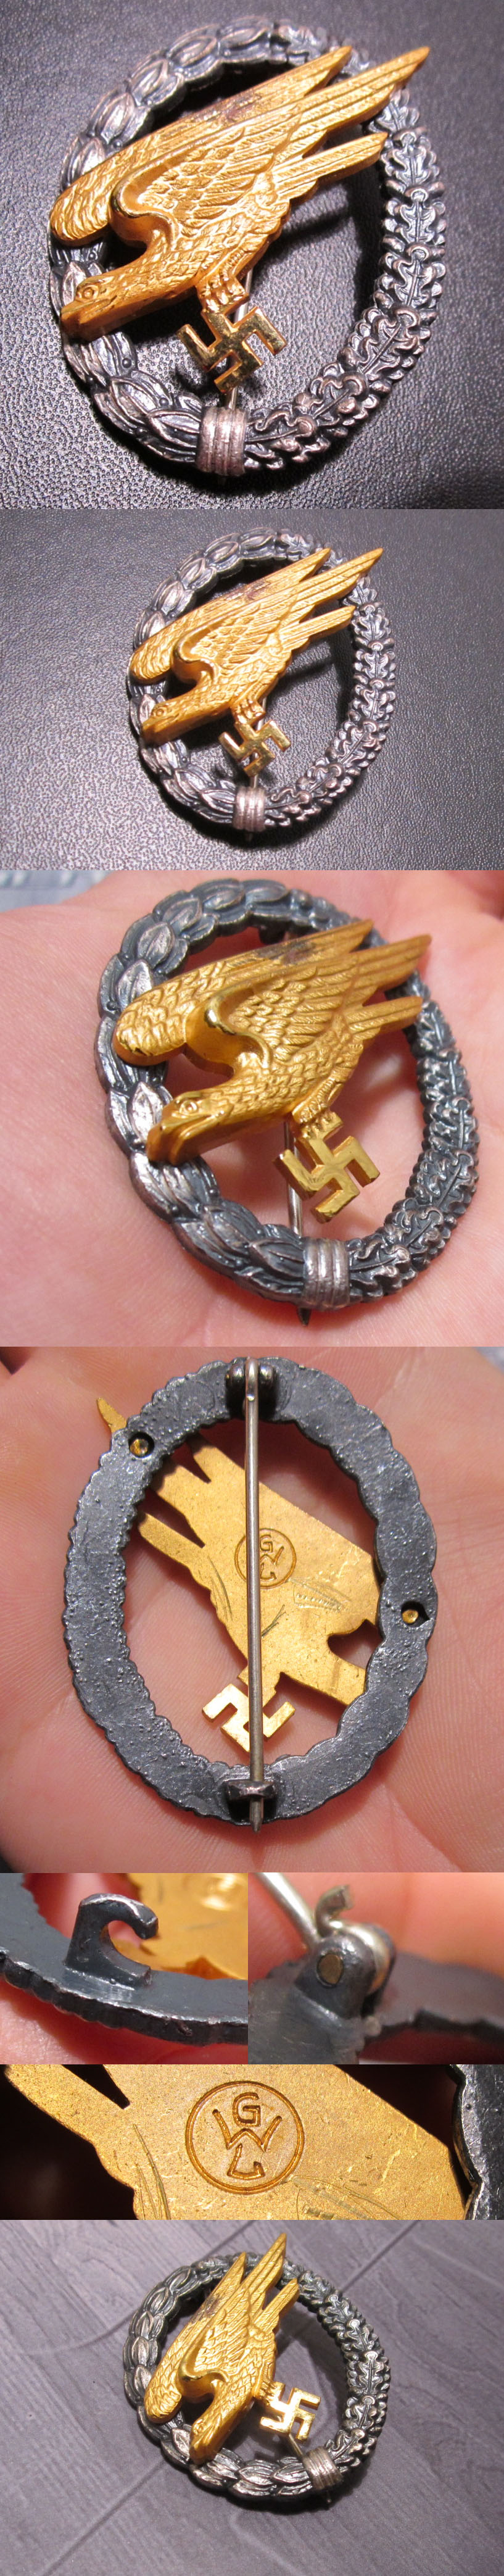 Luftwaffe Paratrooper Badge by GWL